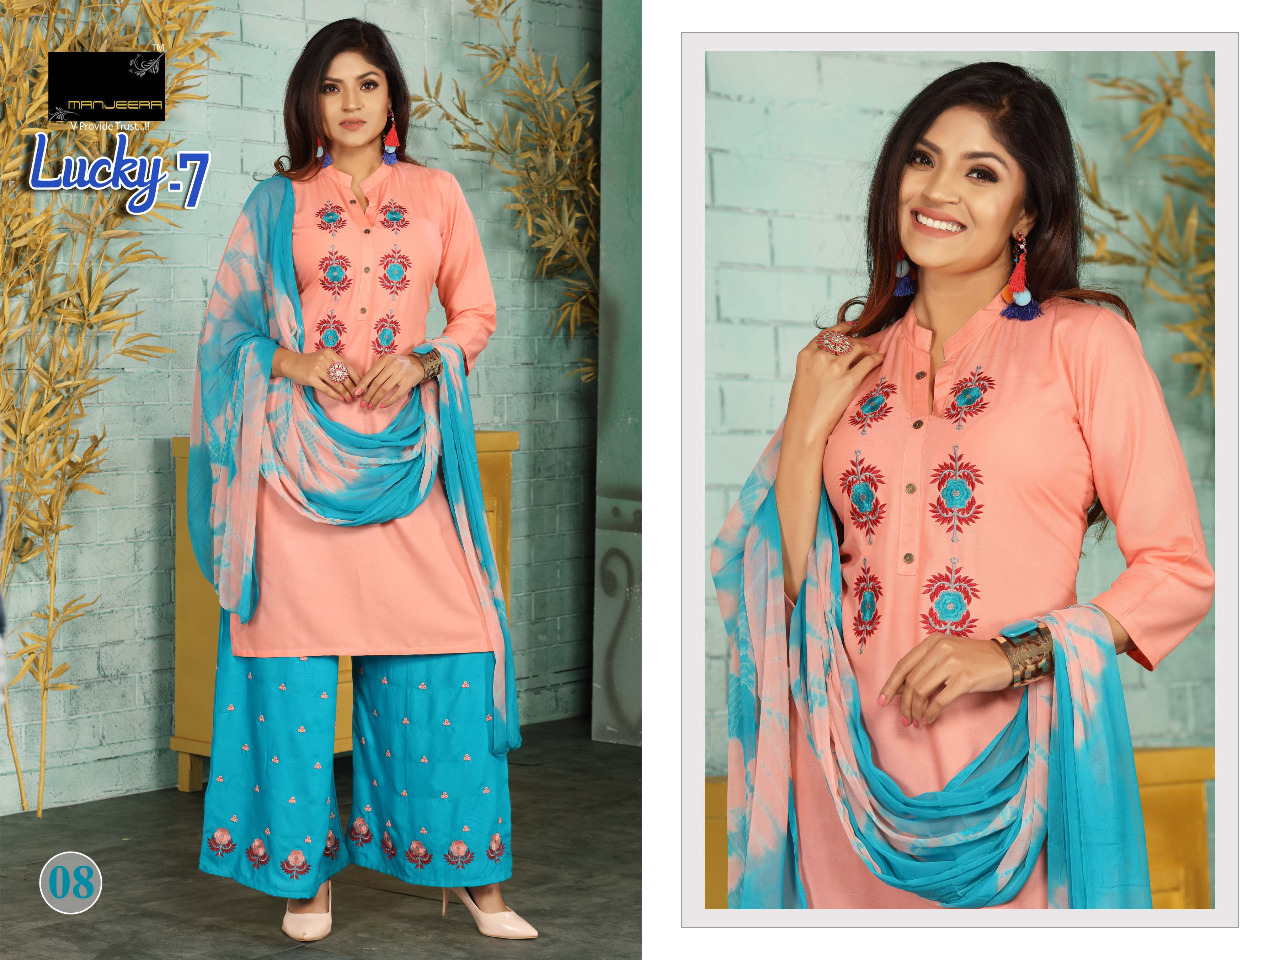 Manjeera Lucky vol 7 elagant look attractive Style beautifull Kurties